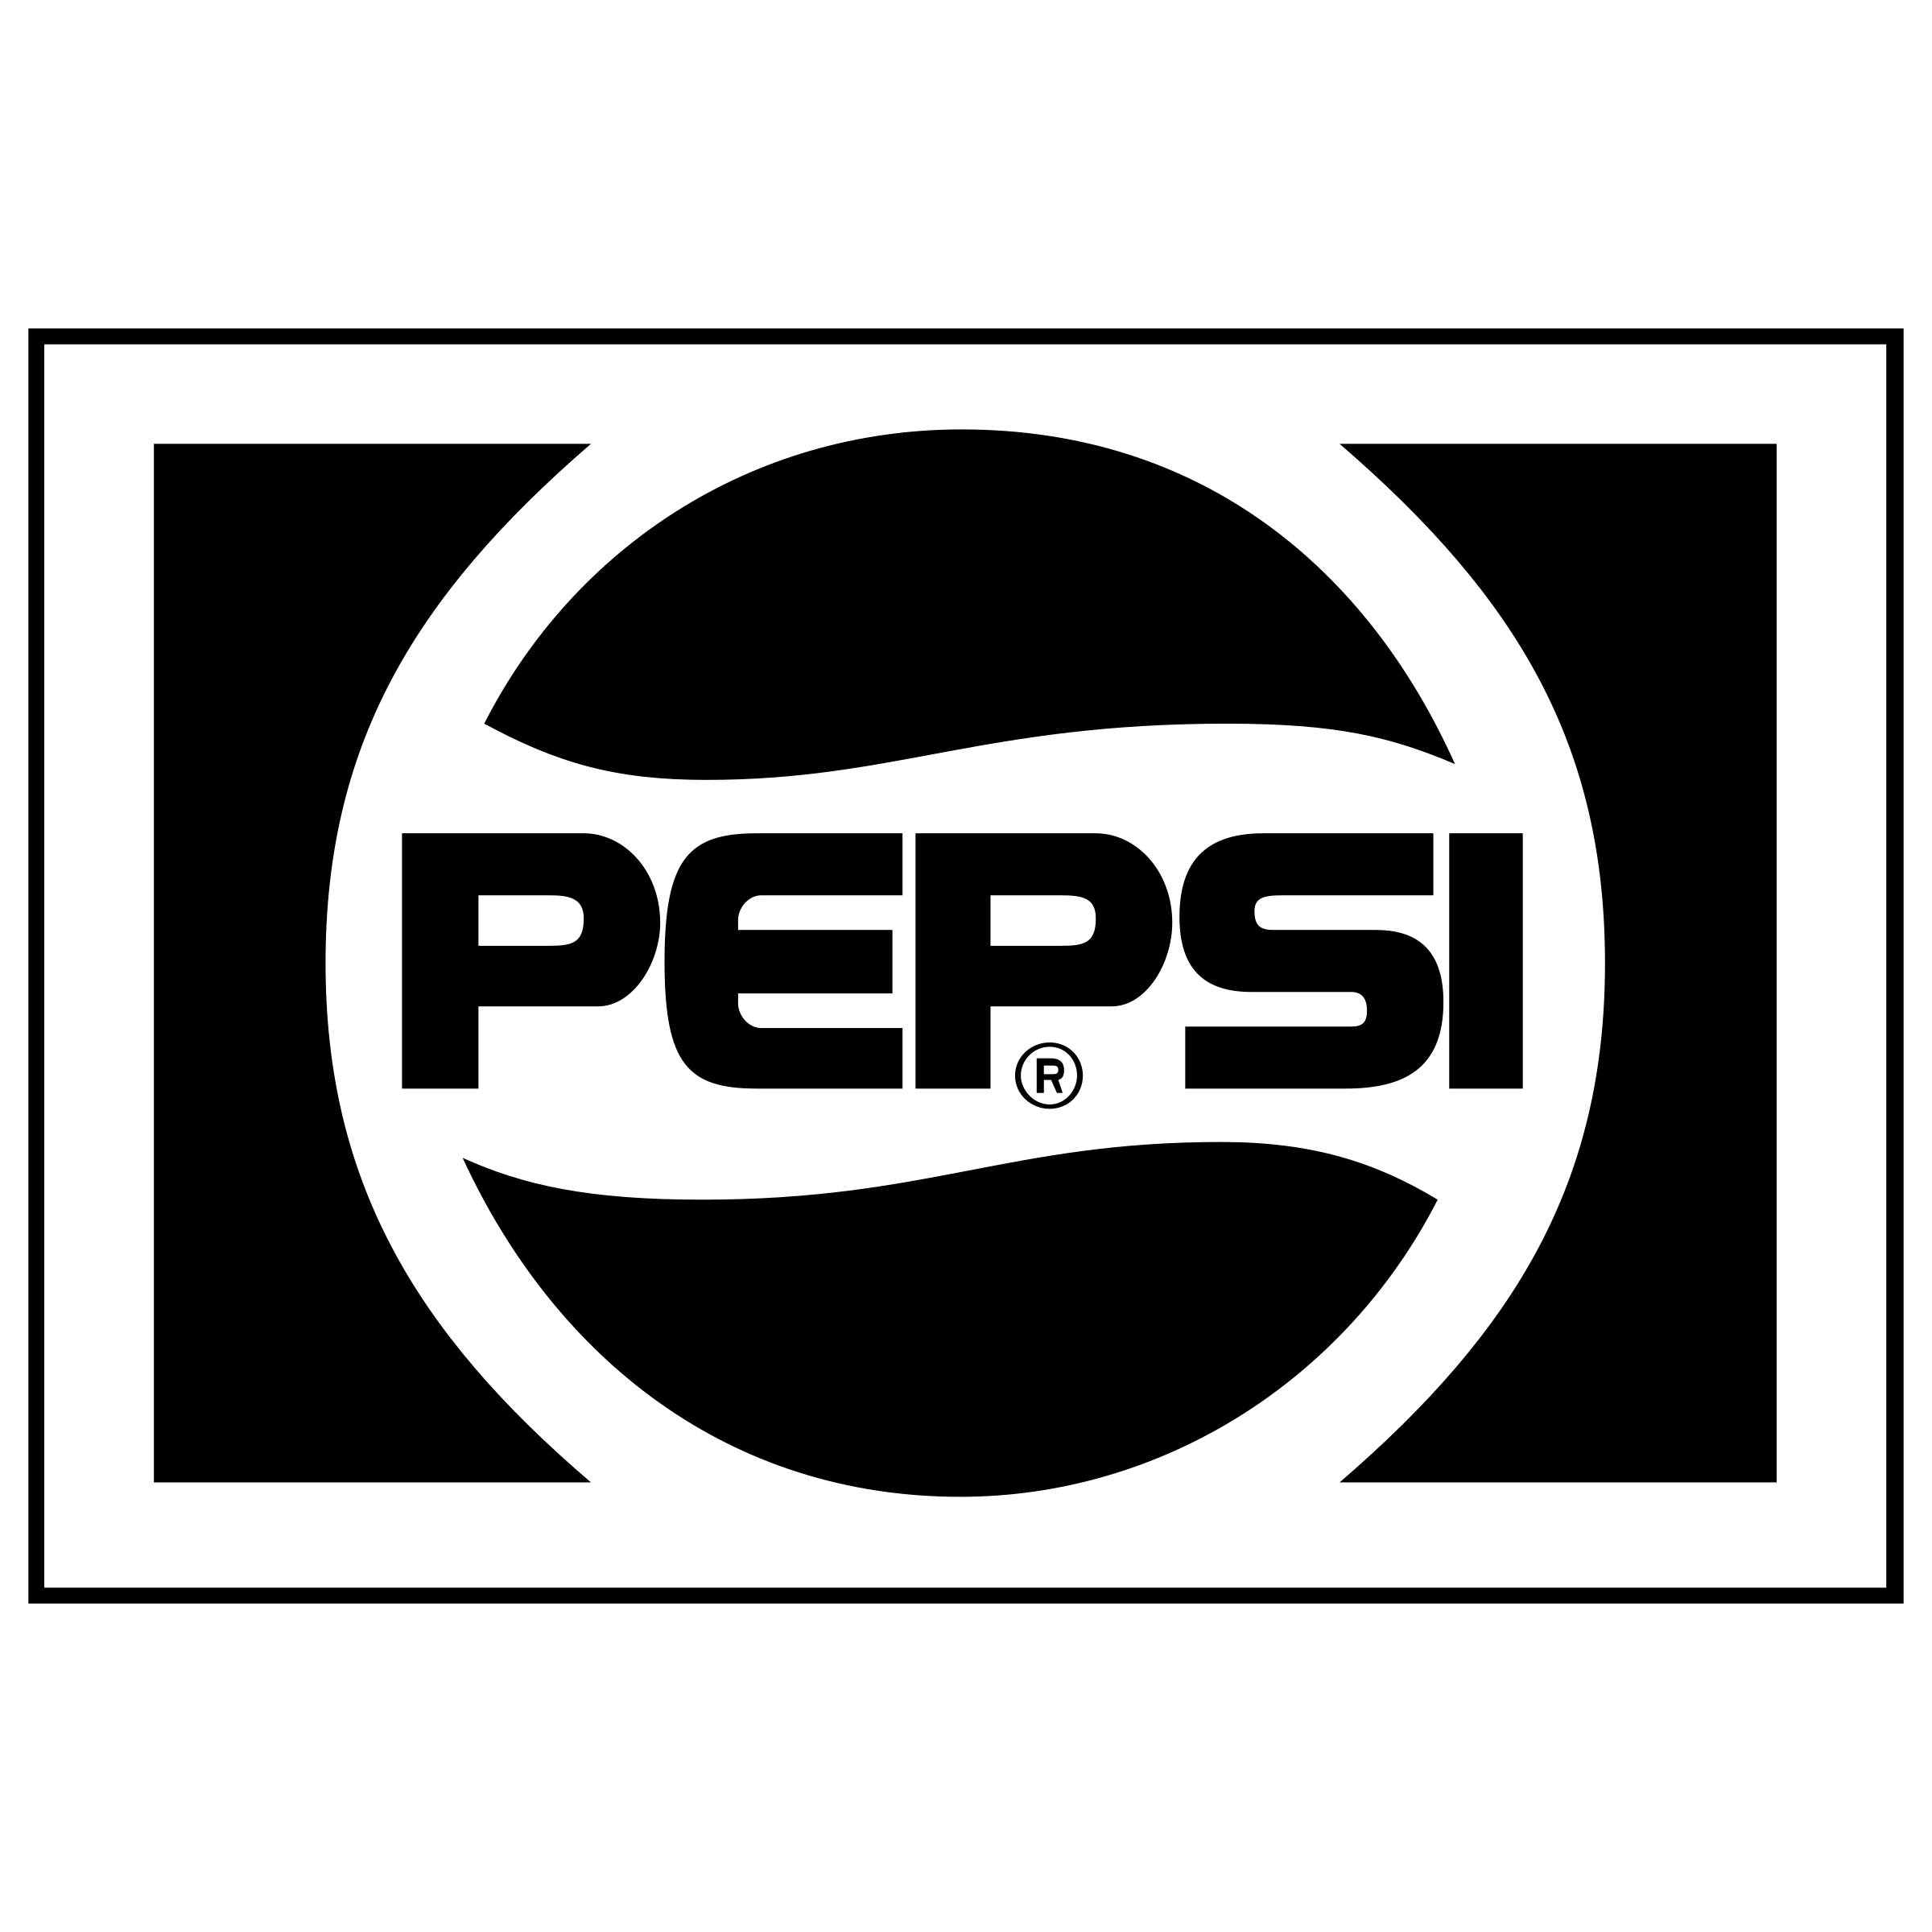 Pepis Logo - Pepsi Logo PNG Transparent & SVG Vector - Freebie Supply